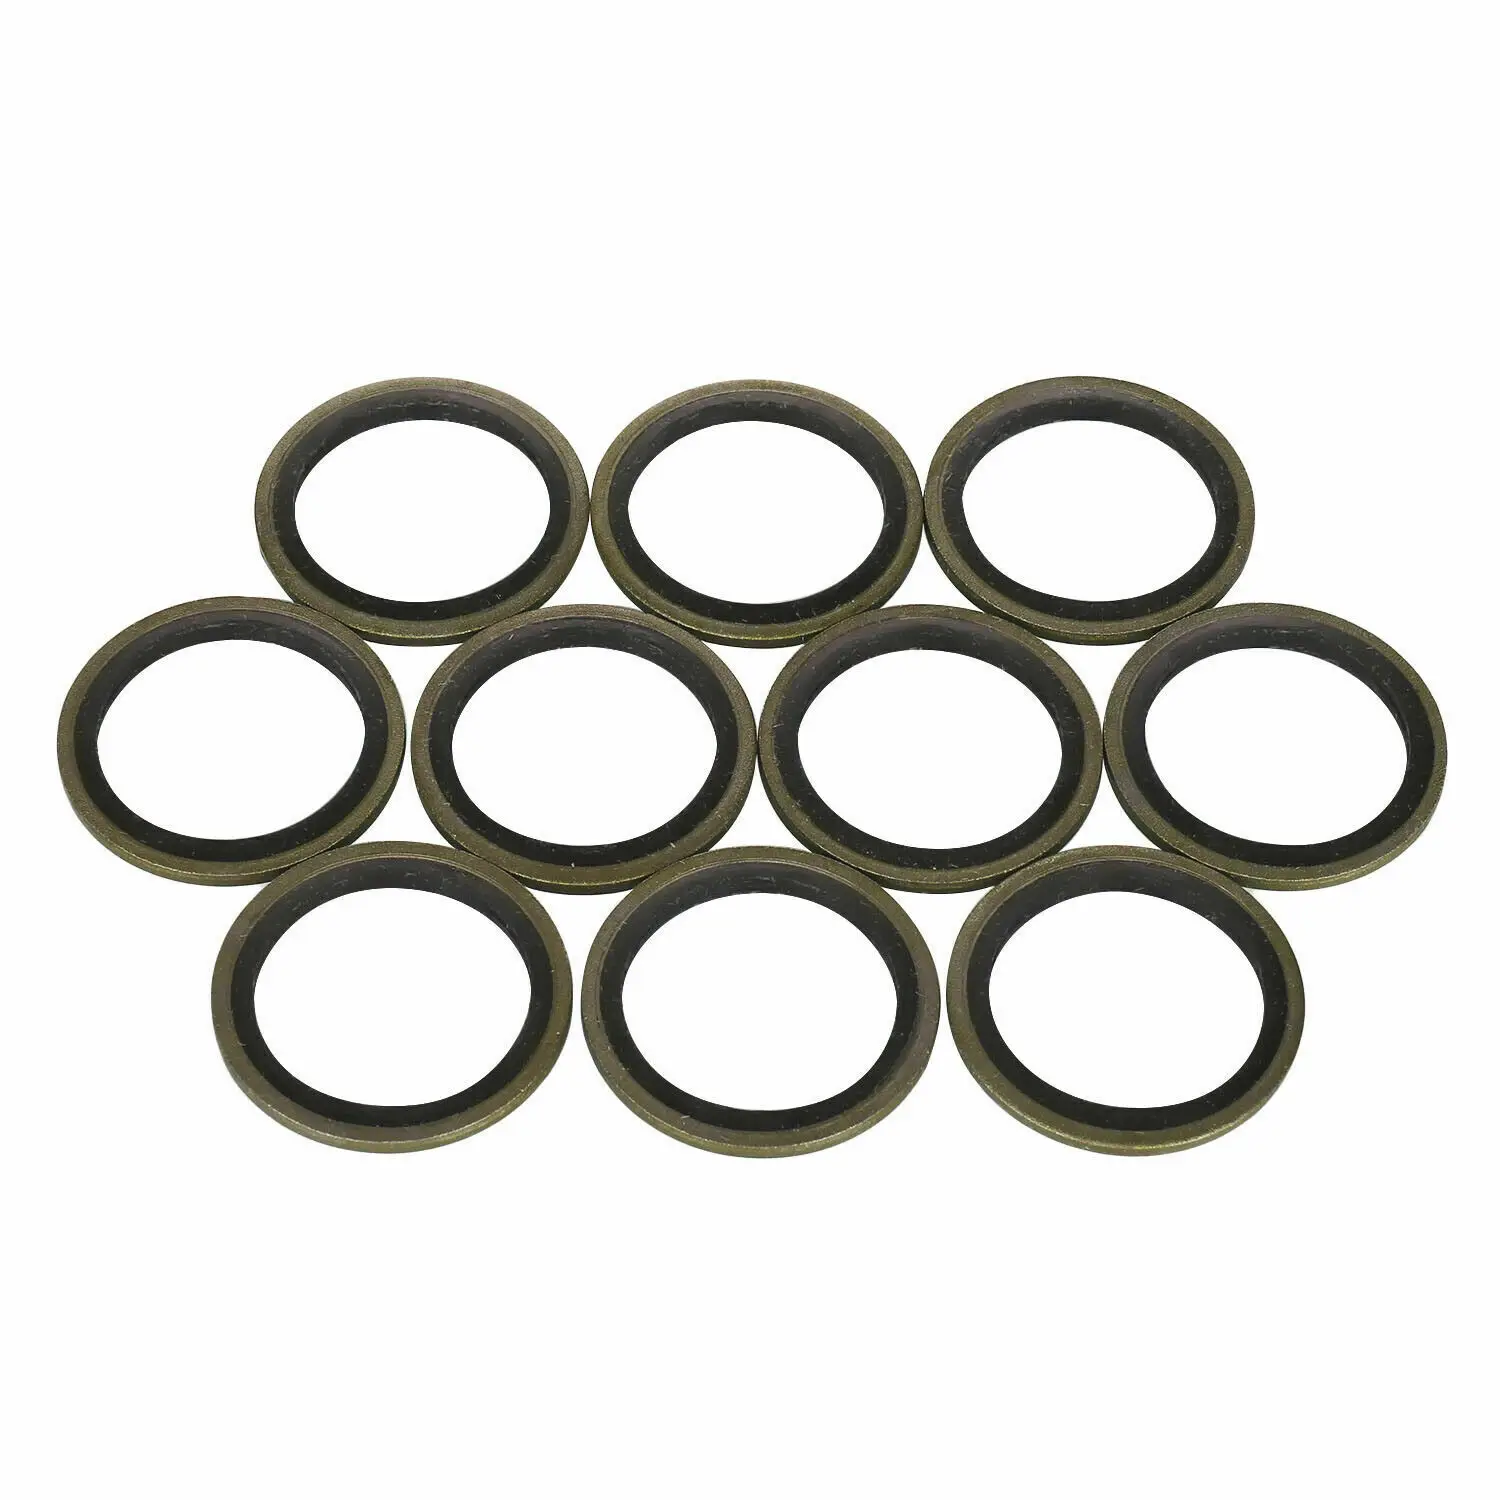 150/100pcs Bonded Seal Sealing Ring Assortment Kit Oil Drain Screw Combined Washer Seal Set M6 M8 M10 M12 M14 M16 M18 M20 M22